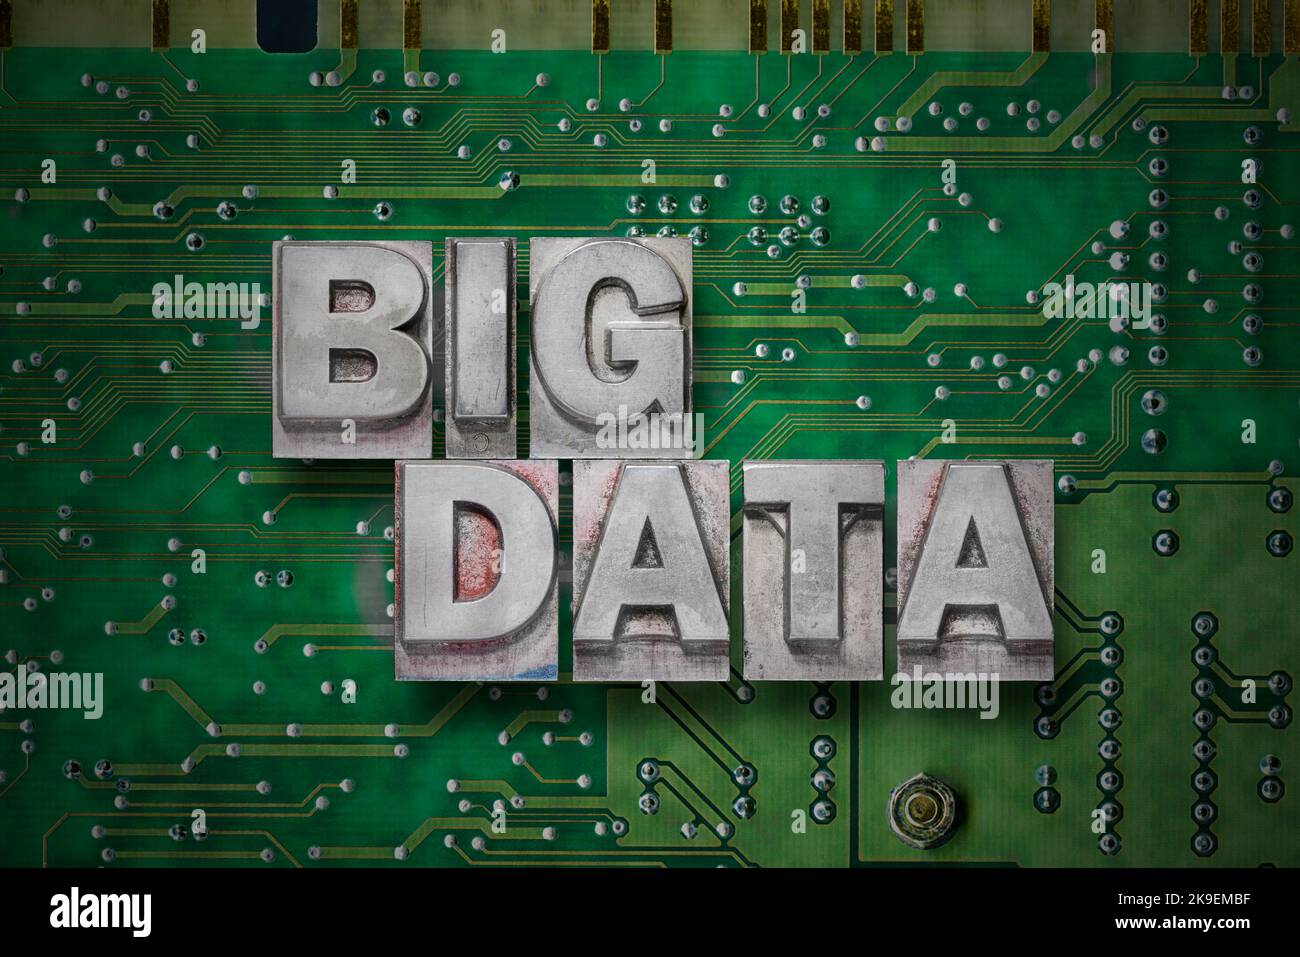 big data phrase made from metallic letterpress blocks on the pc board background Stock Photo